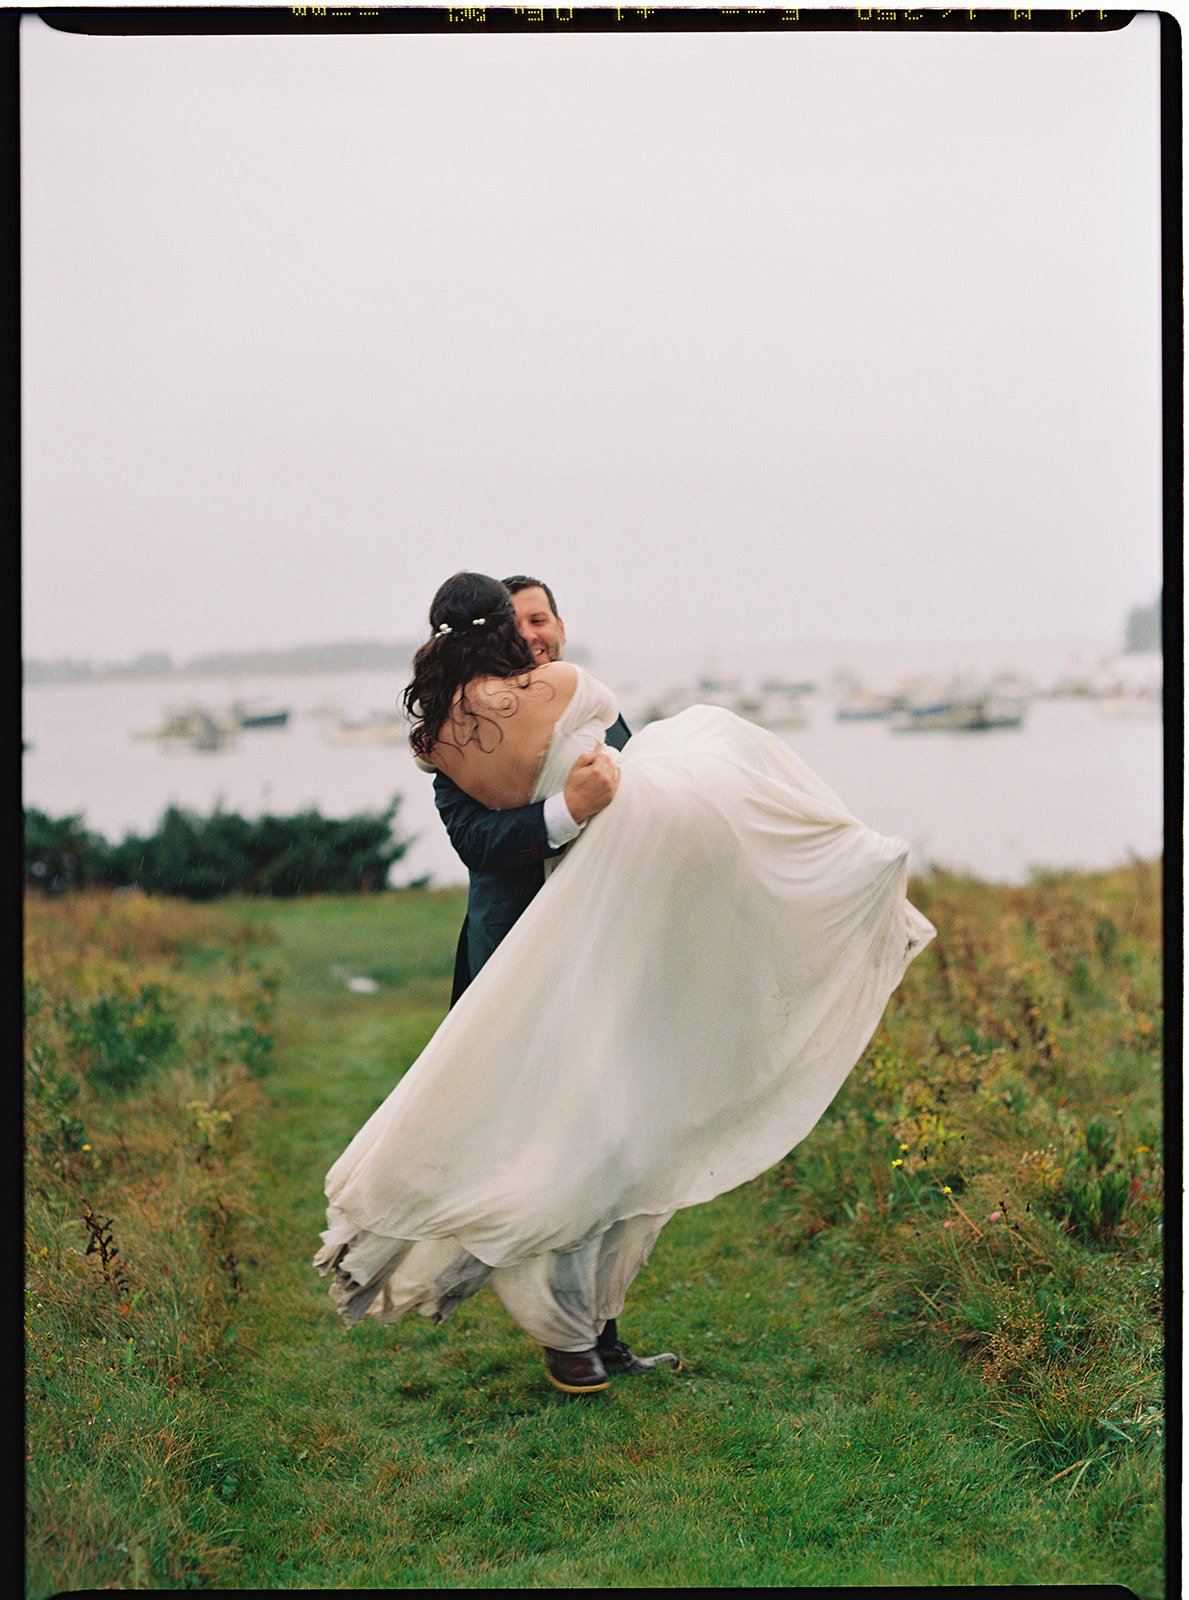 An Apple Picking Wedding Welcome Party - Destination Wedding Photographer - Film  (59).jpg